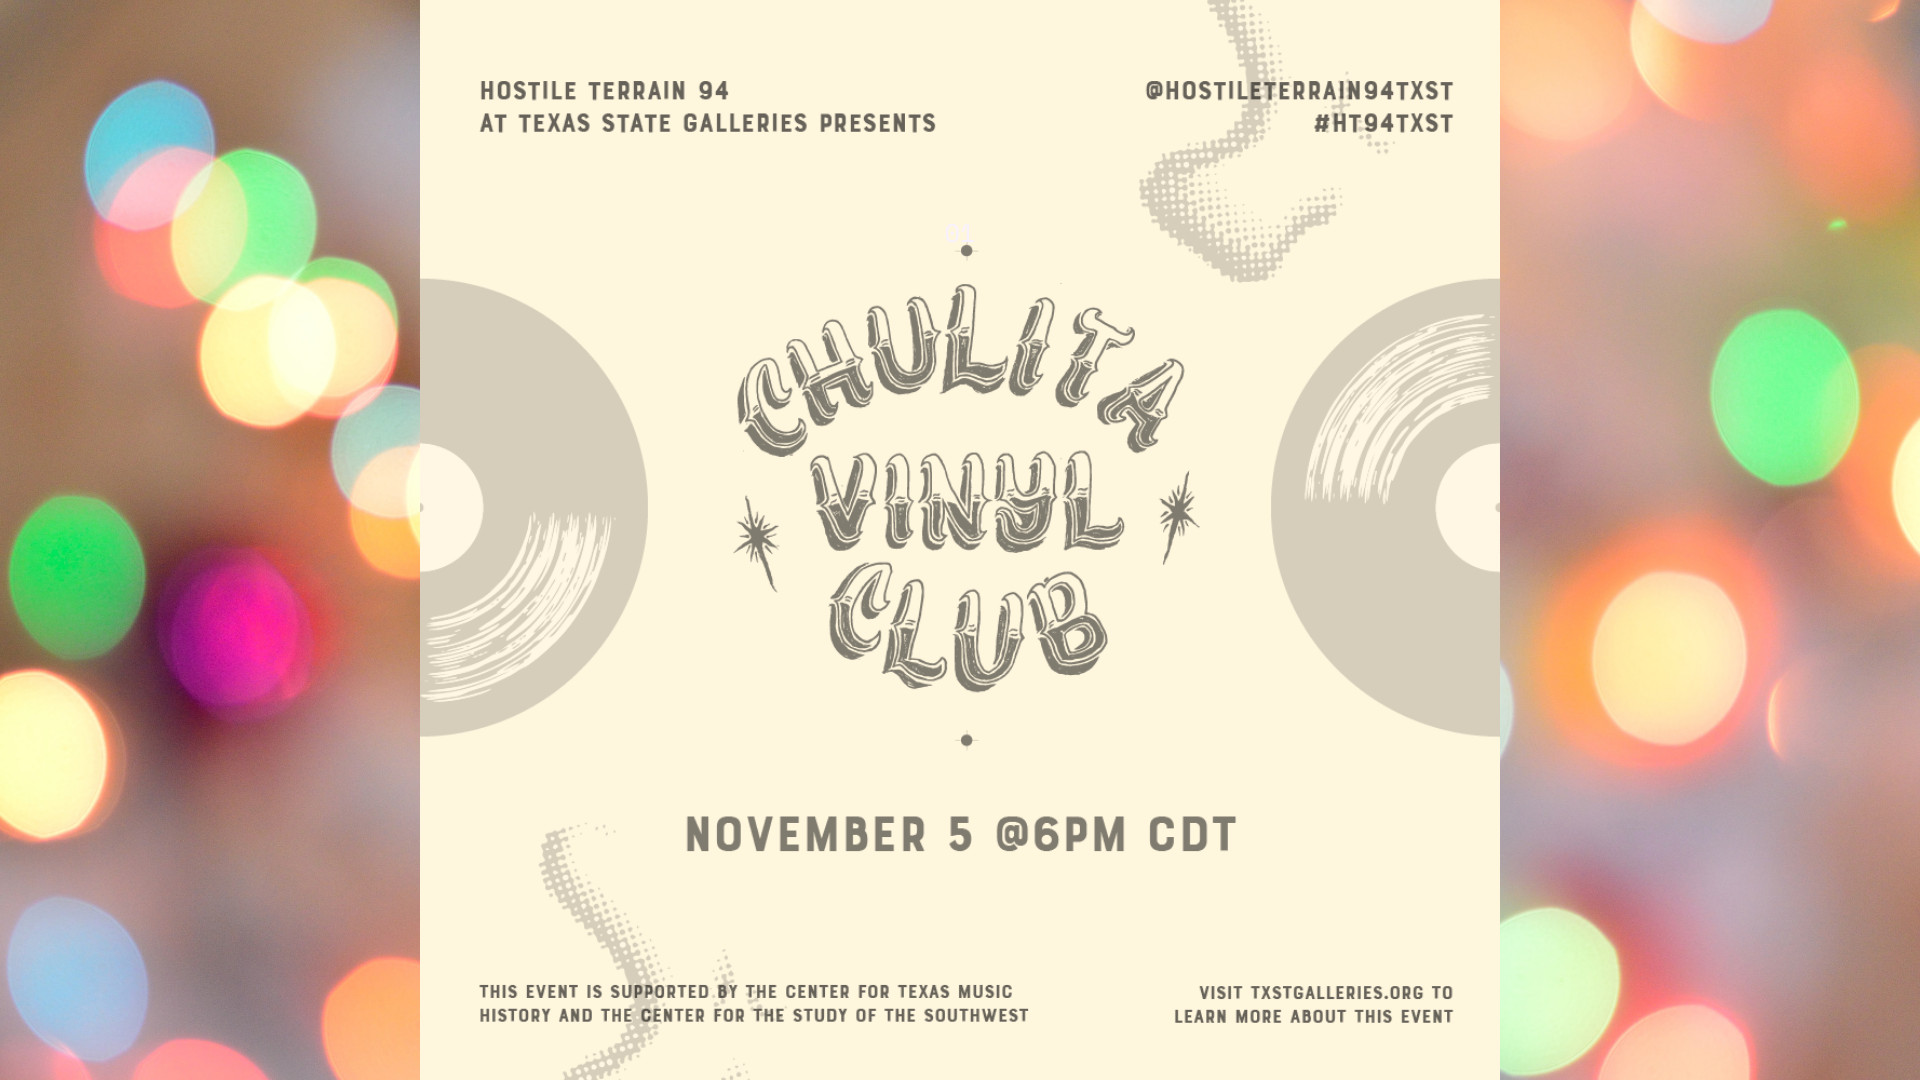 Chulita Vinyl Club Event Image